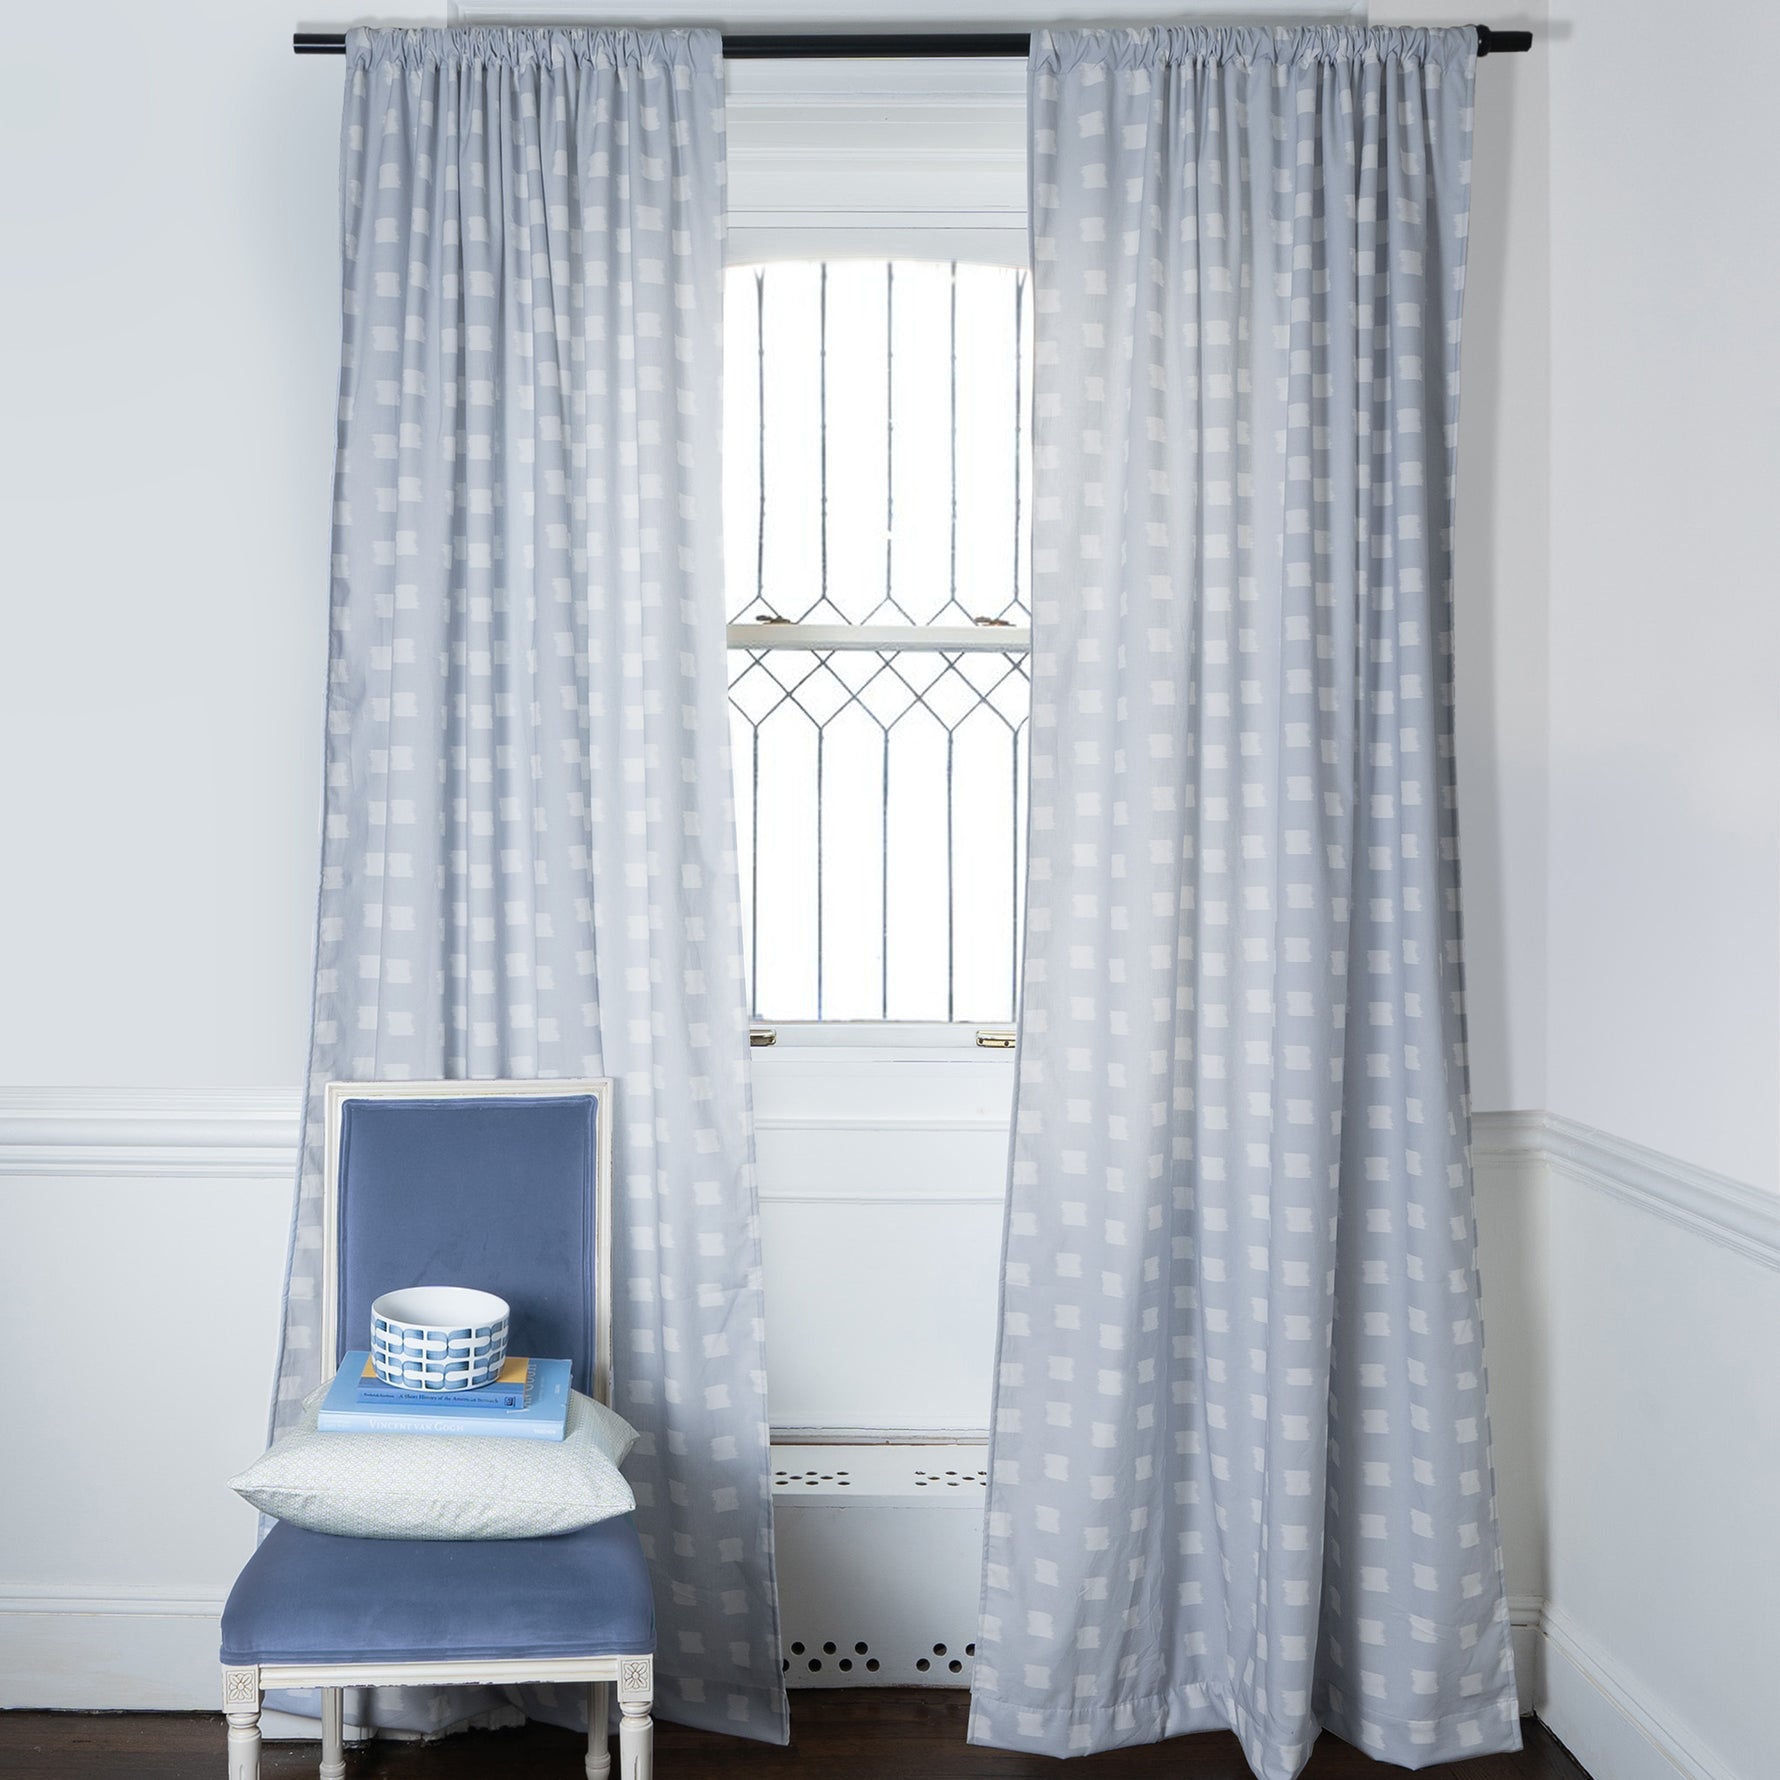 PUSSMUN curtains, 1 pair, white/multicolor, 145x250 cm (57x98